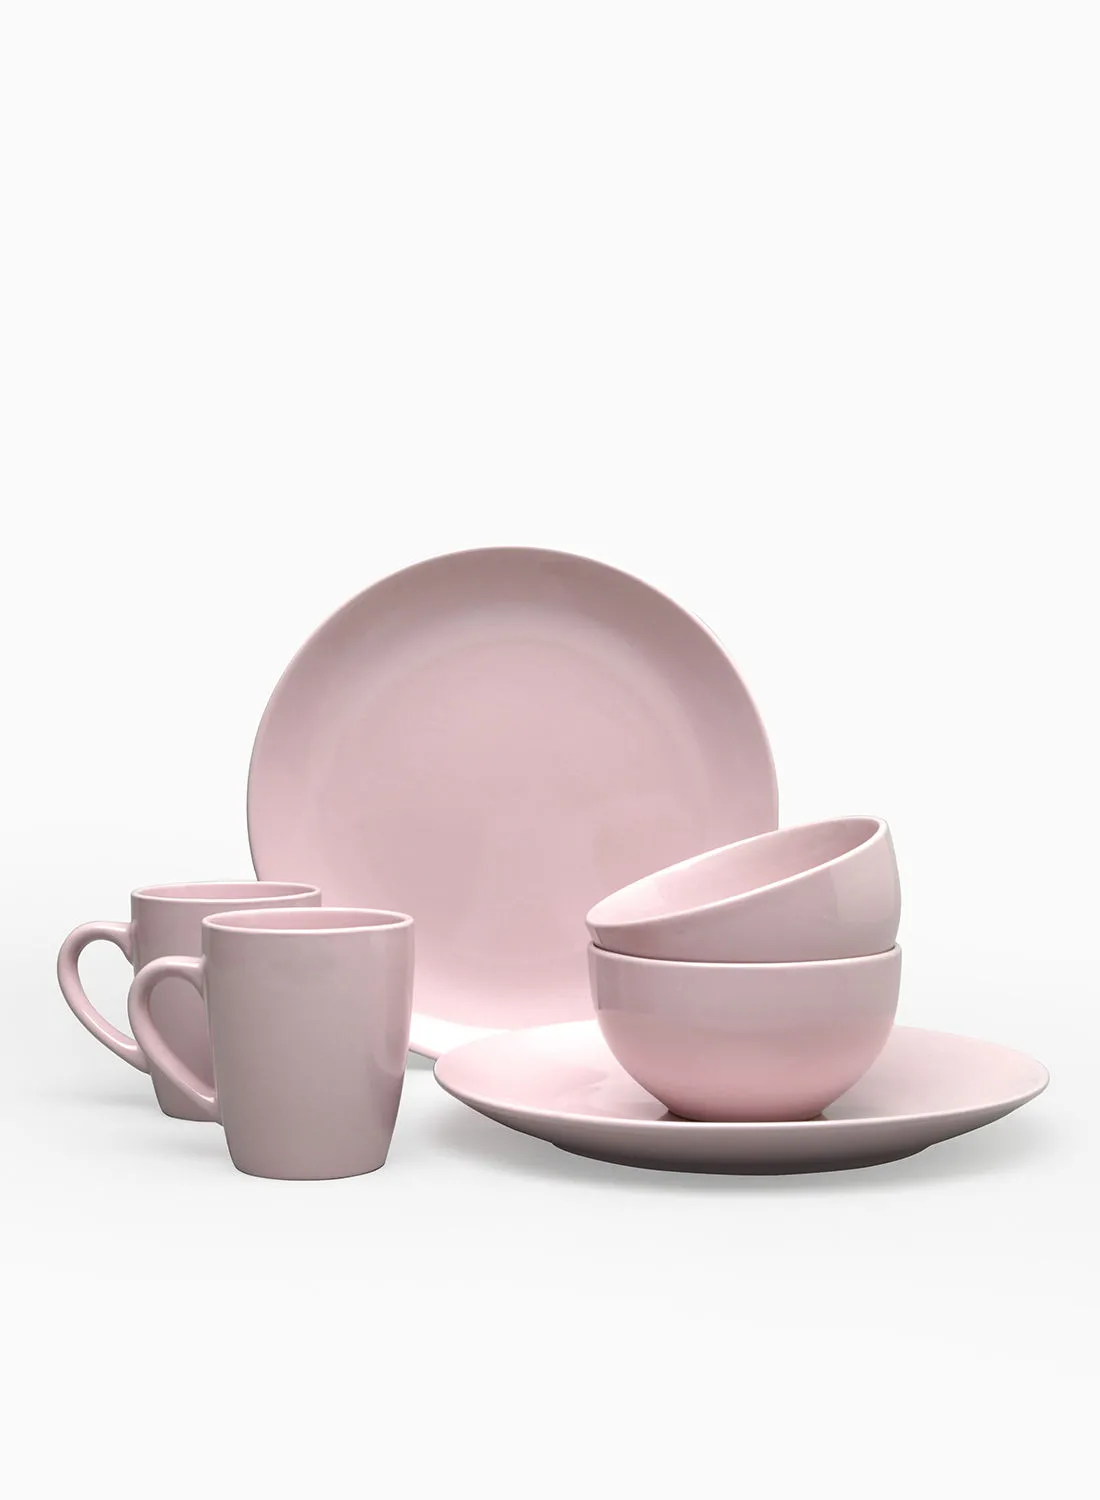 Noon East 6 Piece Stoneware Dinner Set - Dishes, Plates - Dinner Plate, Bowl, Mugs - Serves 2 - Blush Pink Blush Pink